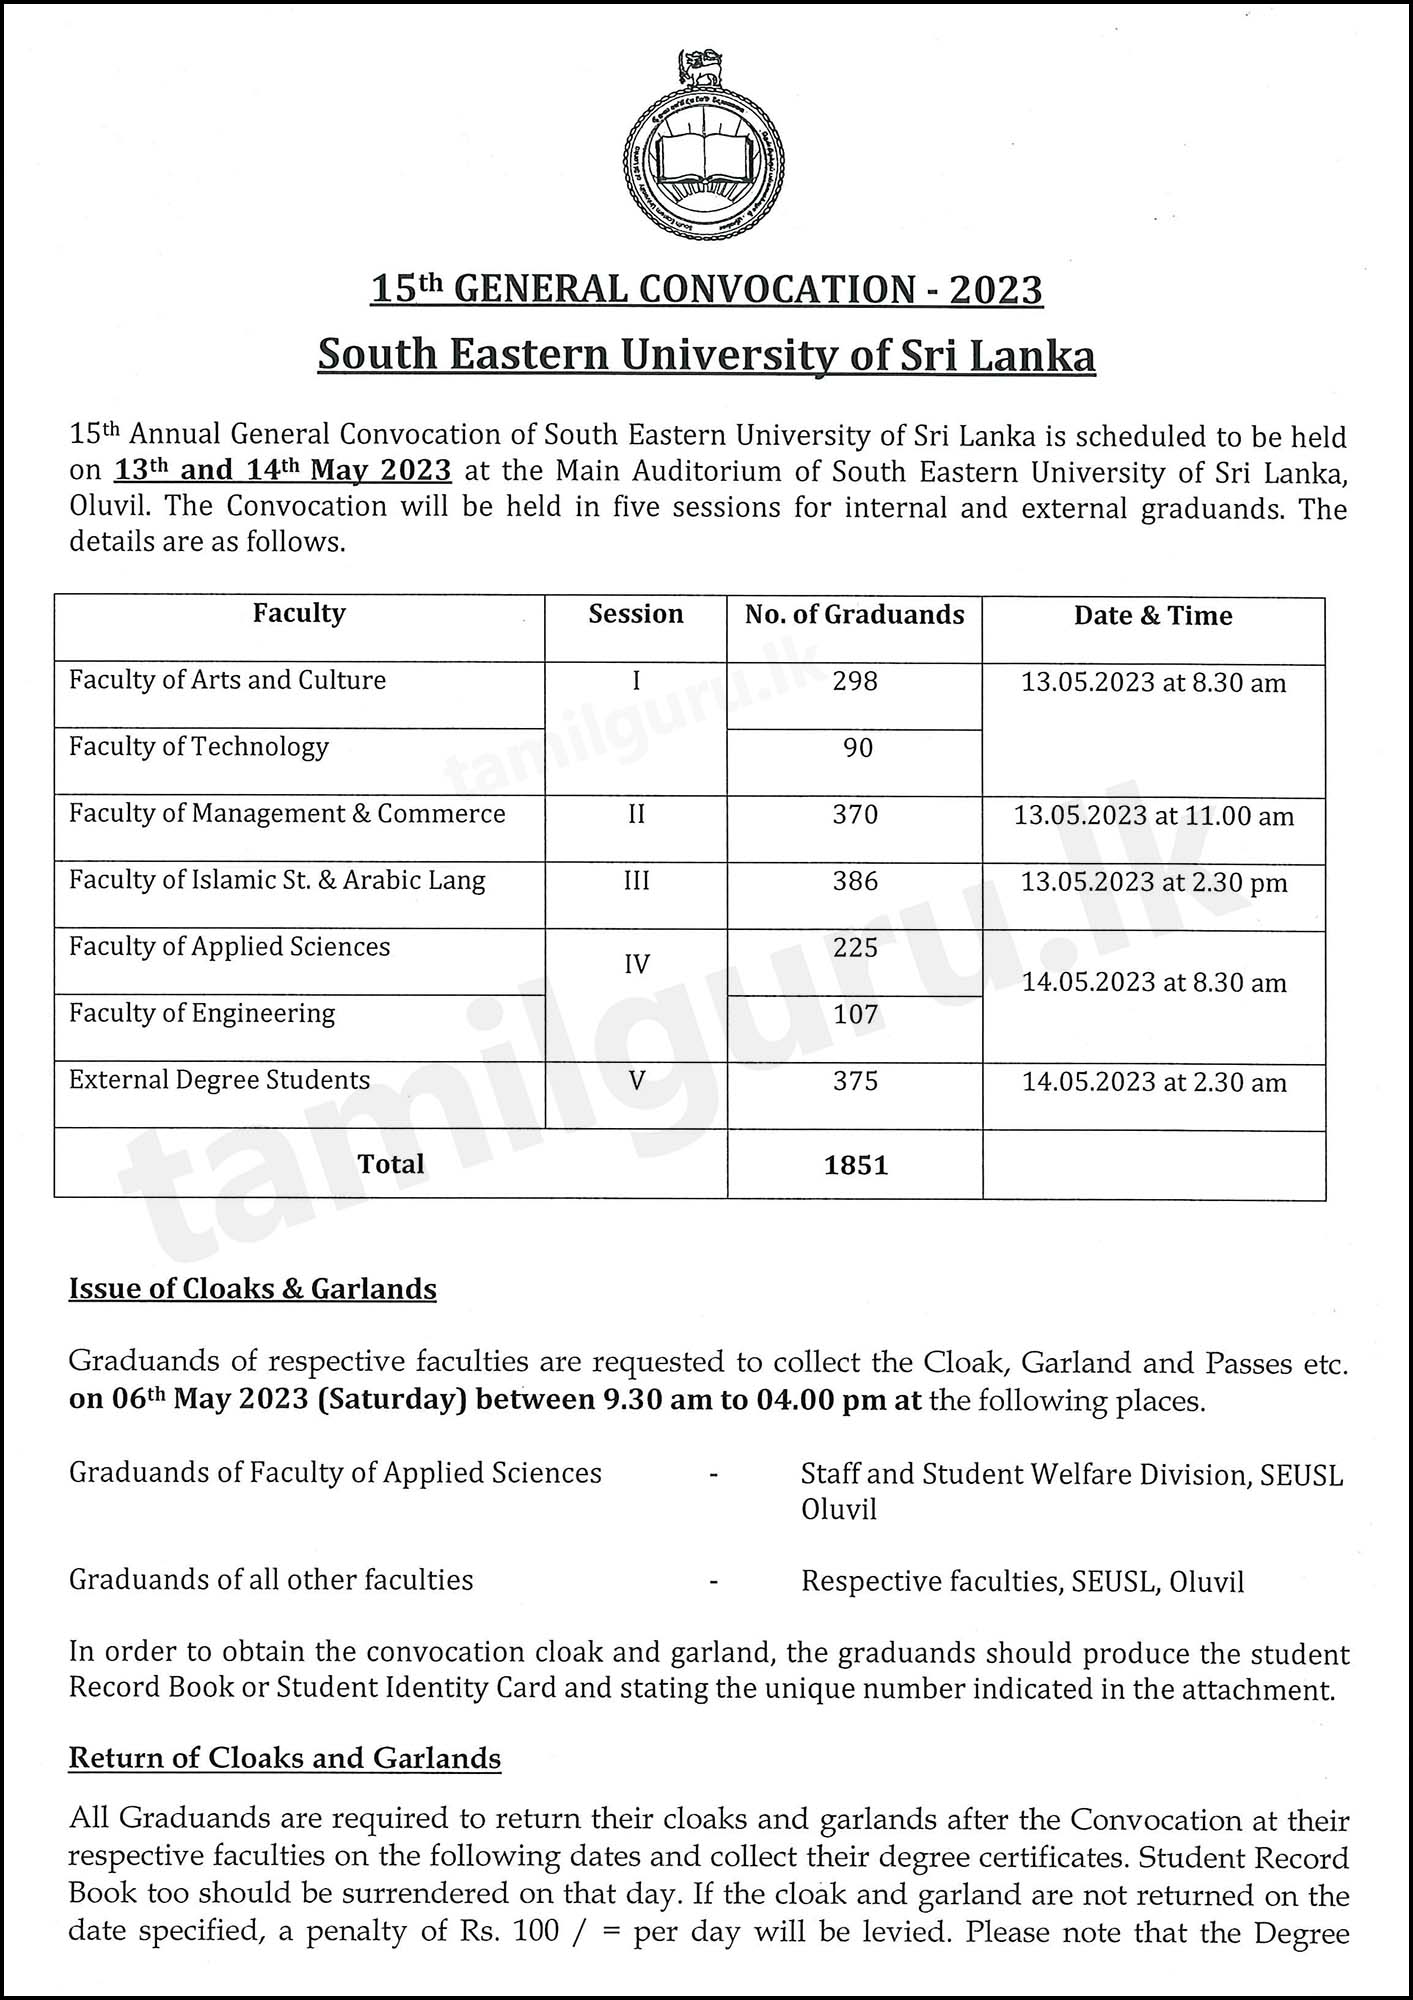 15th Annual General Convocation 2023 - South Eastern University of Sri Lanka (SEUSL)